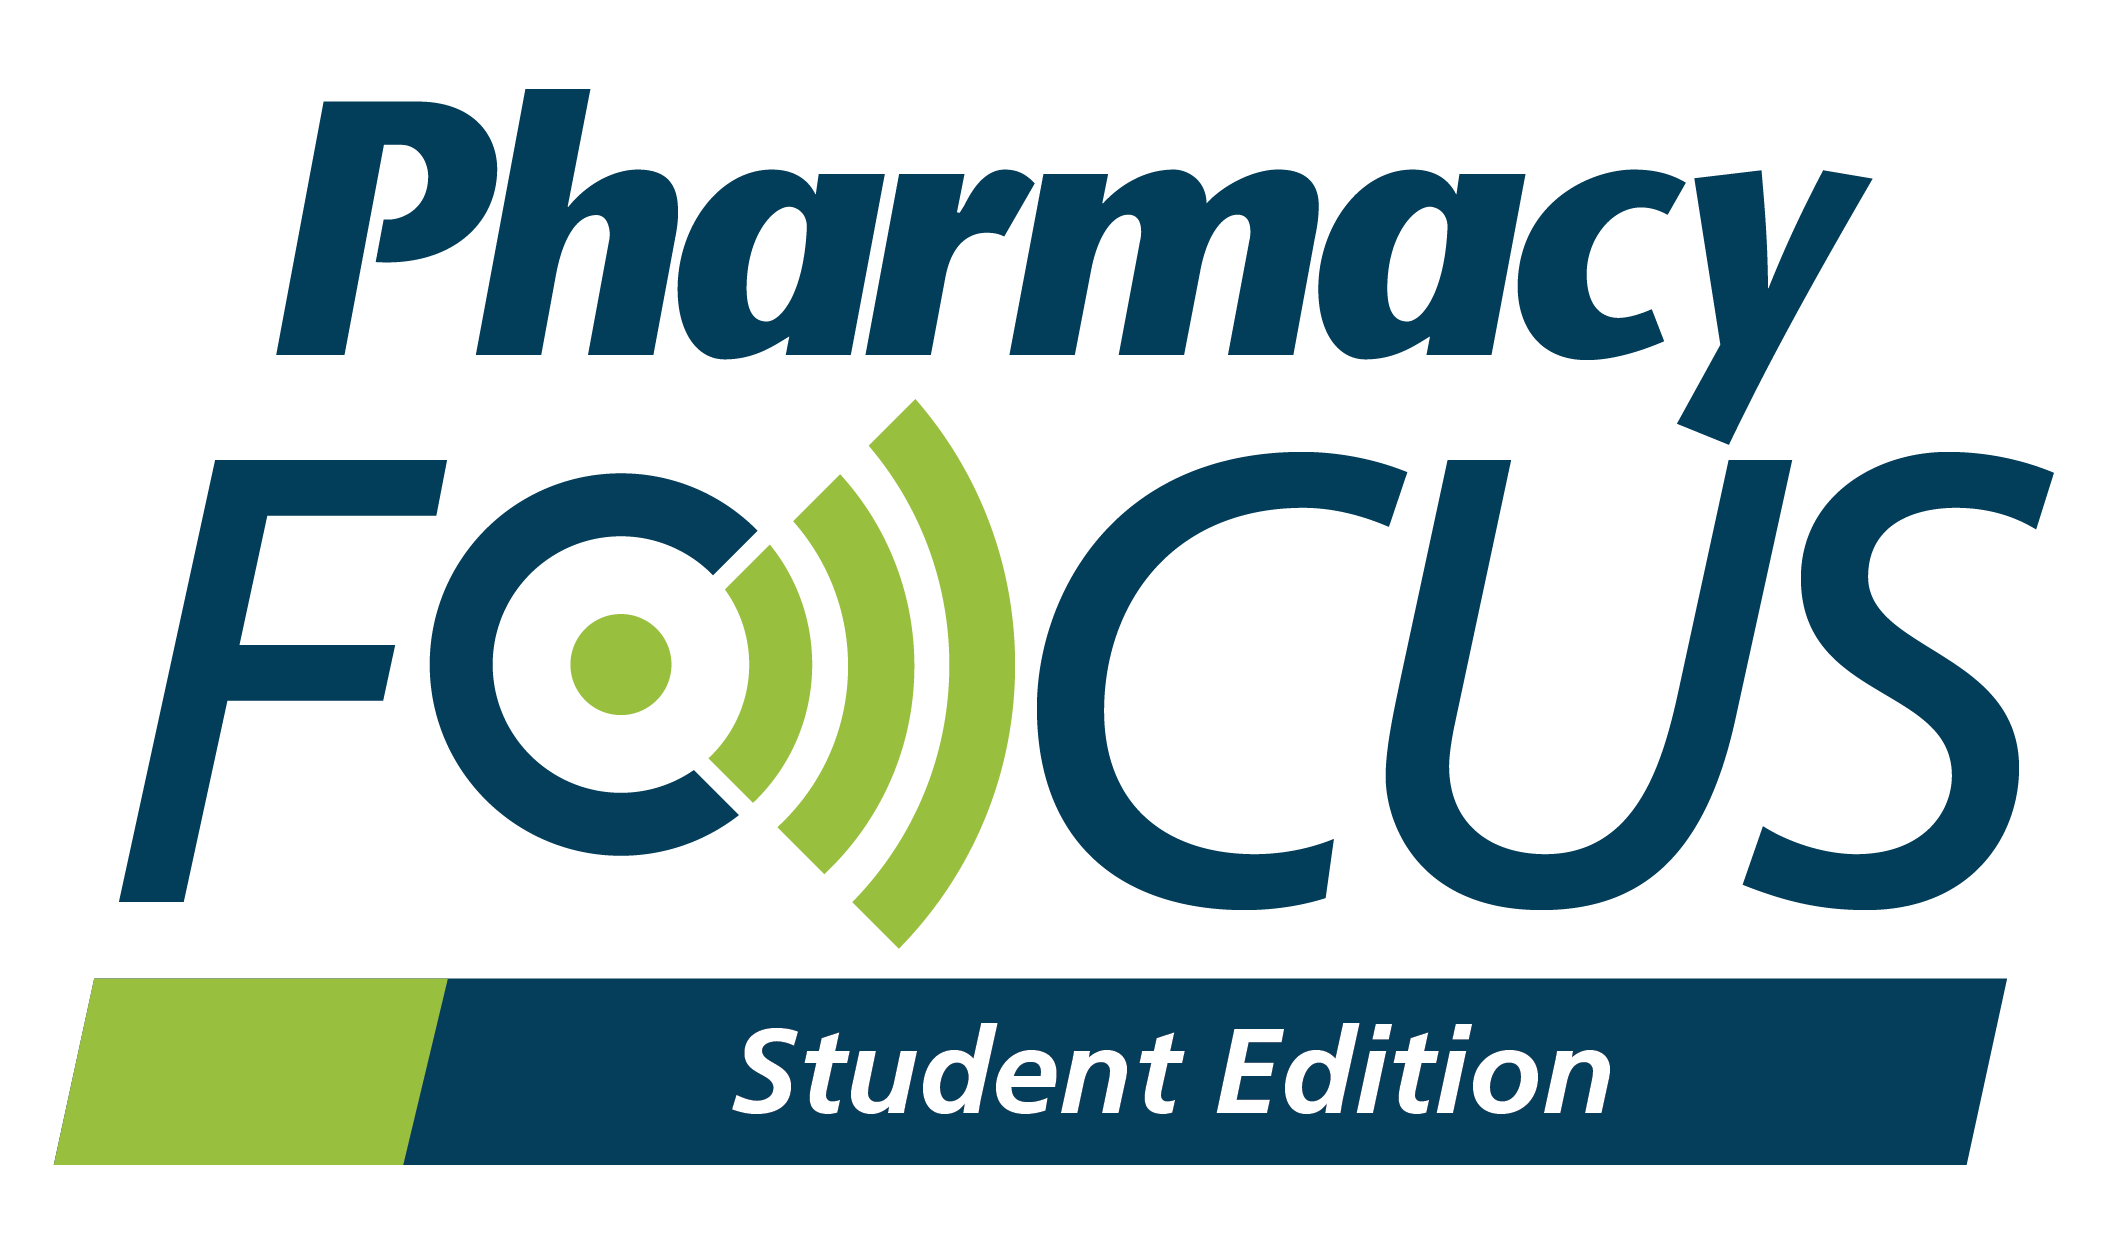 Pharmacy Focus: Student Edition - Episode 3